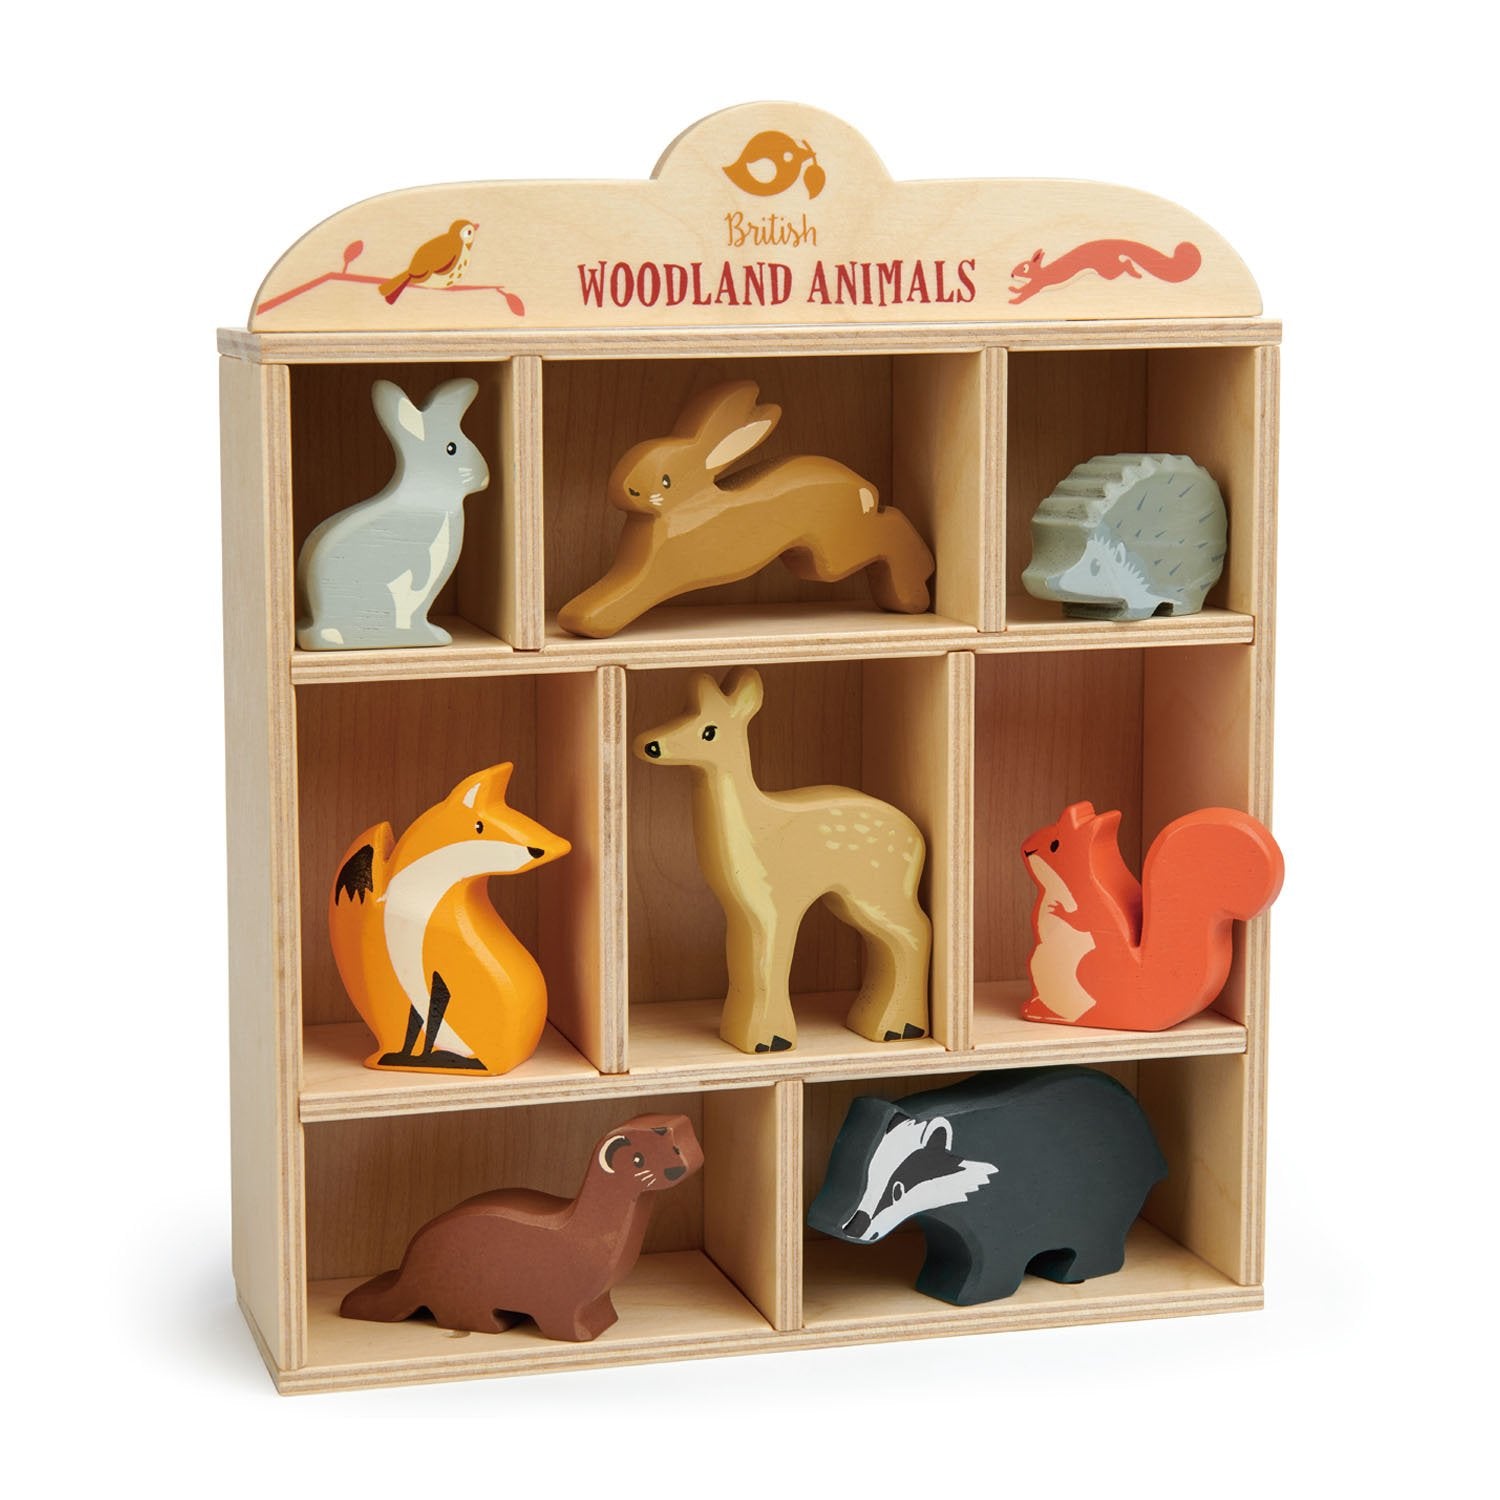 8 Woodland Animals & Shelf